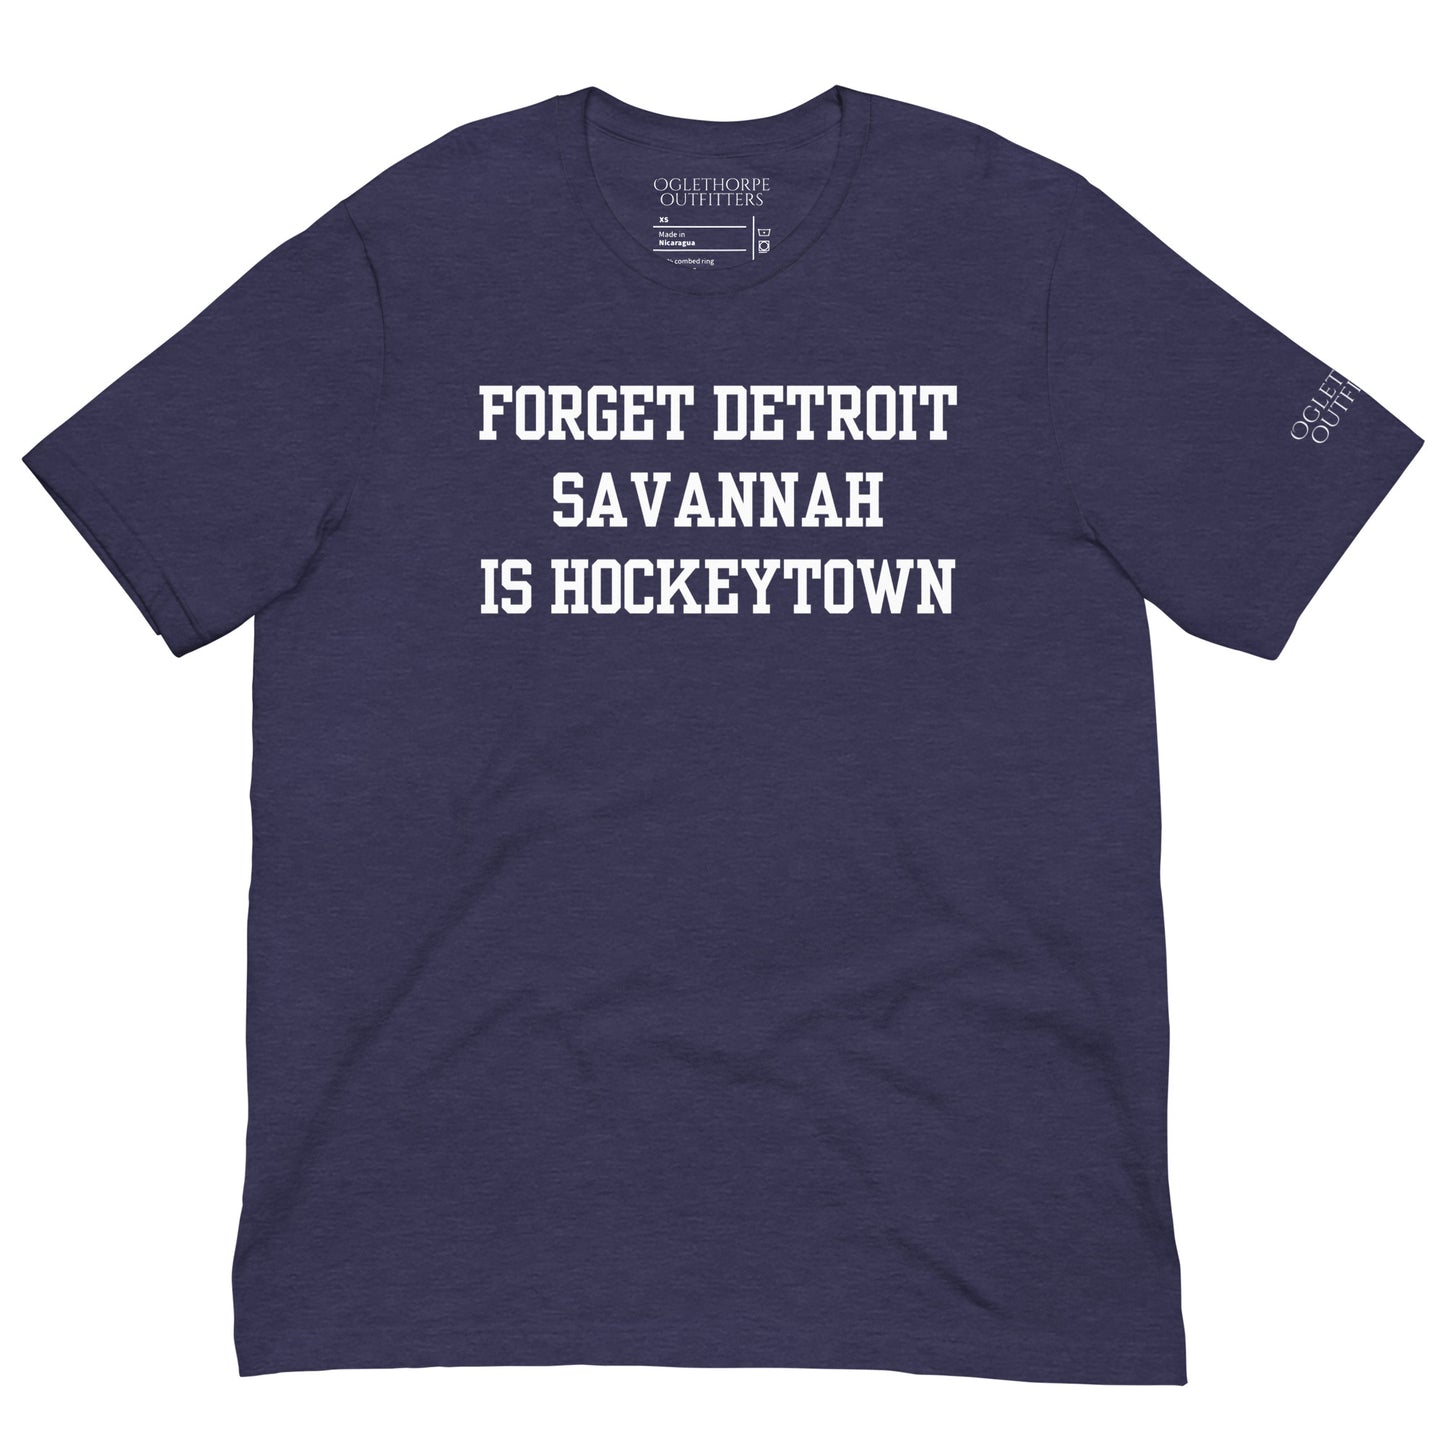 Forget Detroit Savannah is Hockeytown T-Shirt